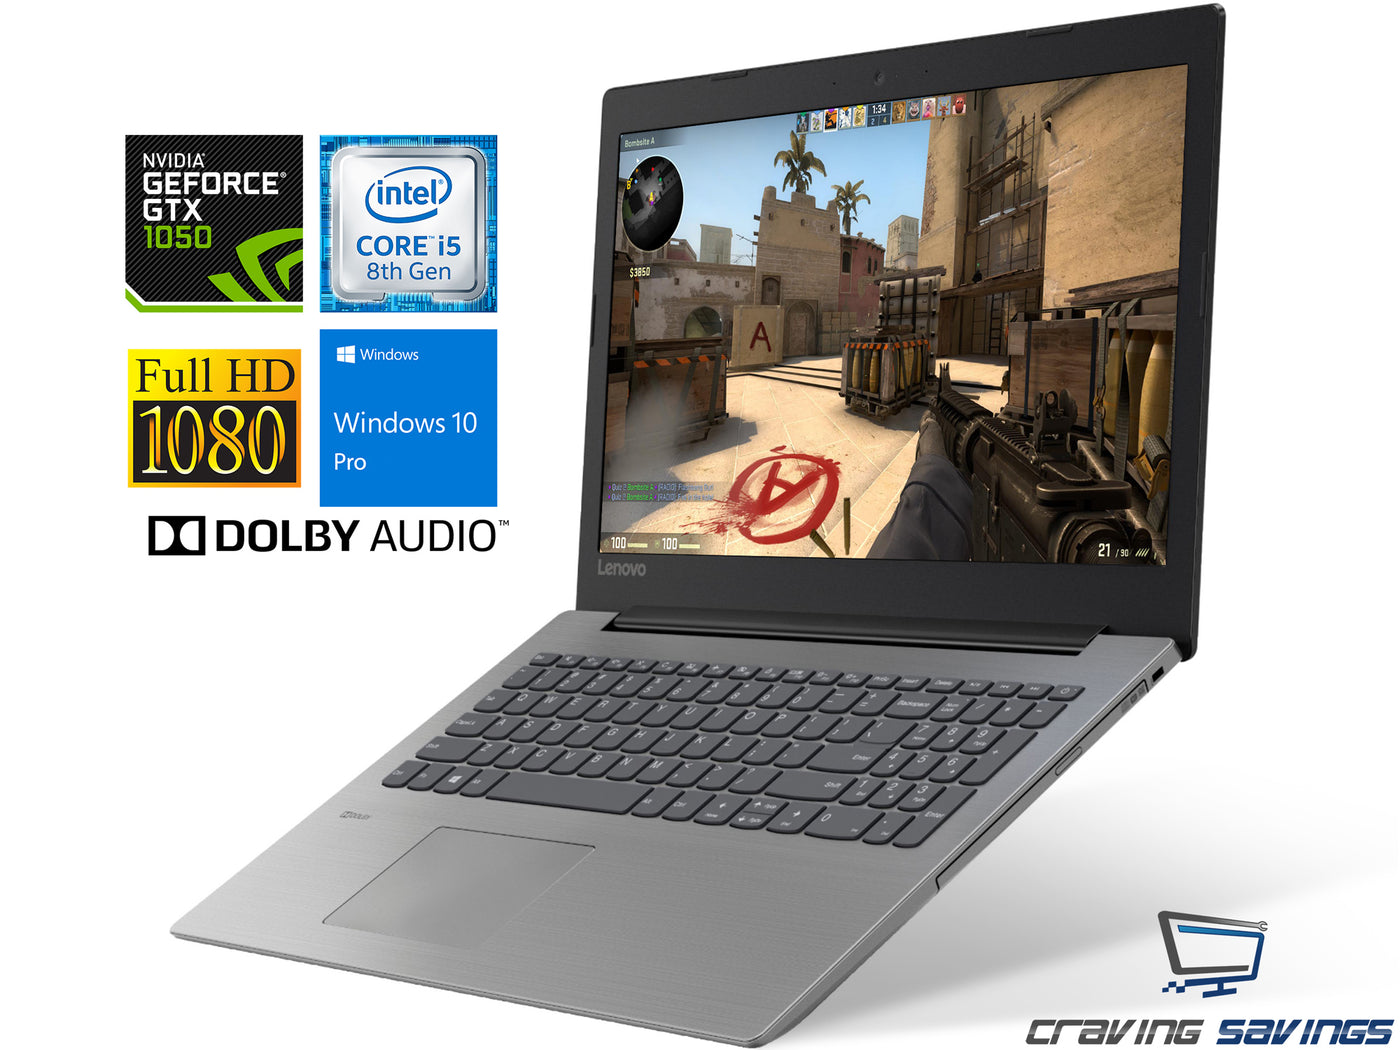 Lenovo Ideapad 330 (15), Durable, Easy-to-Use 15.6” laptop